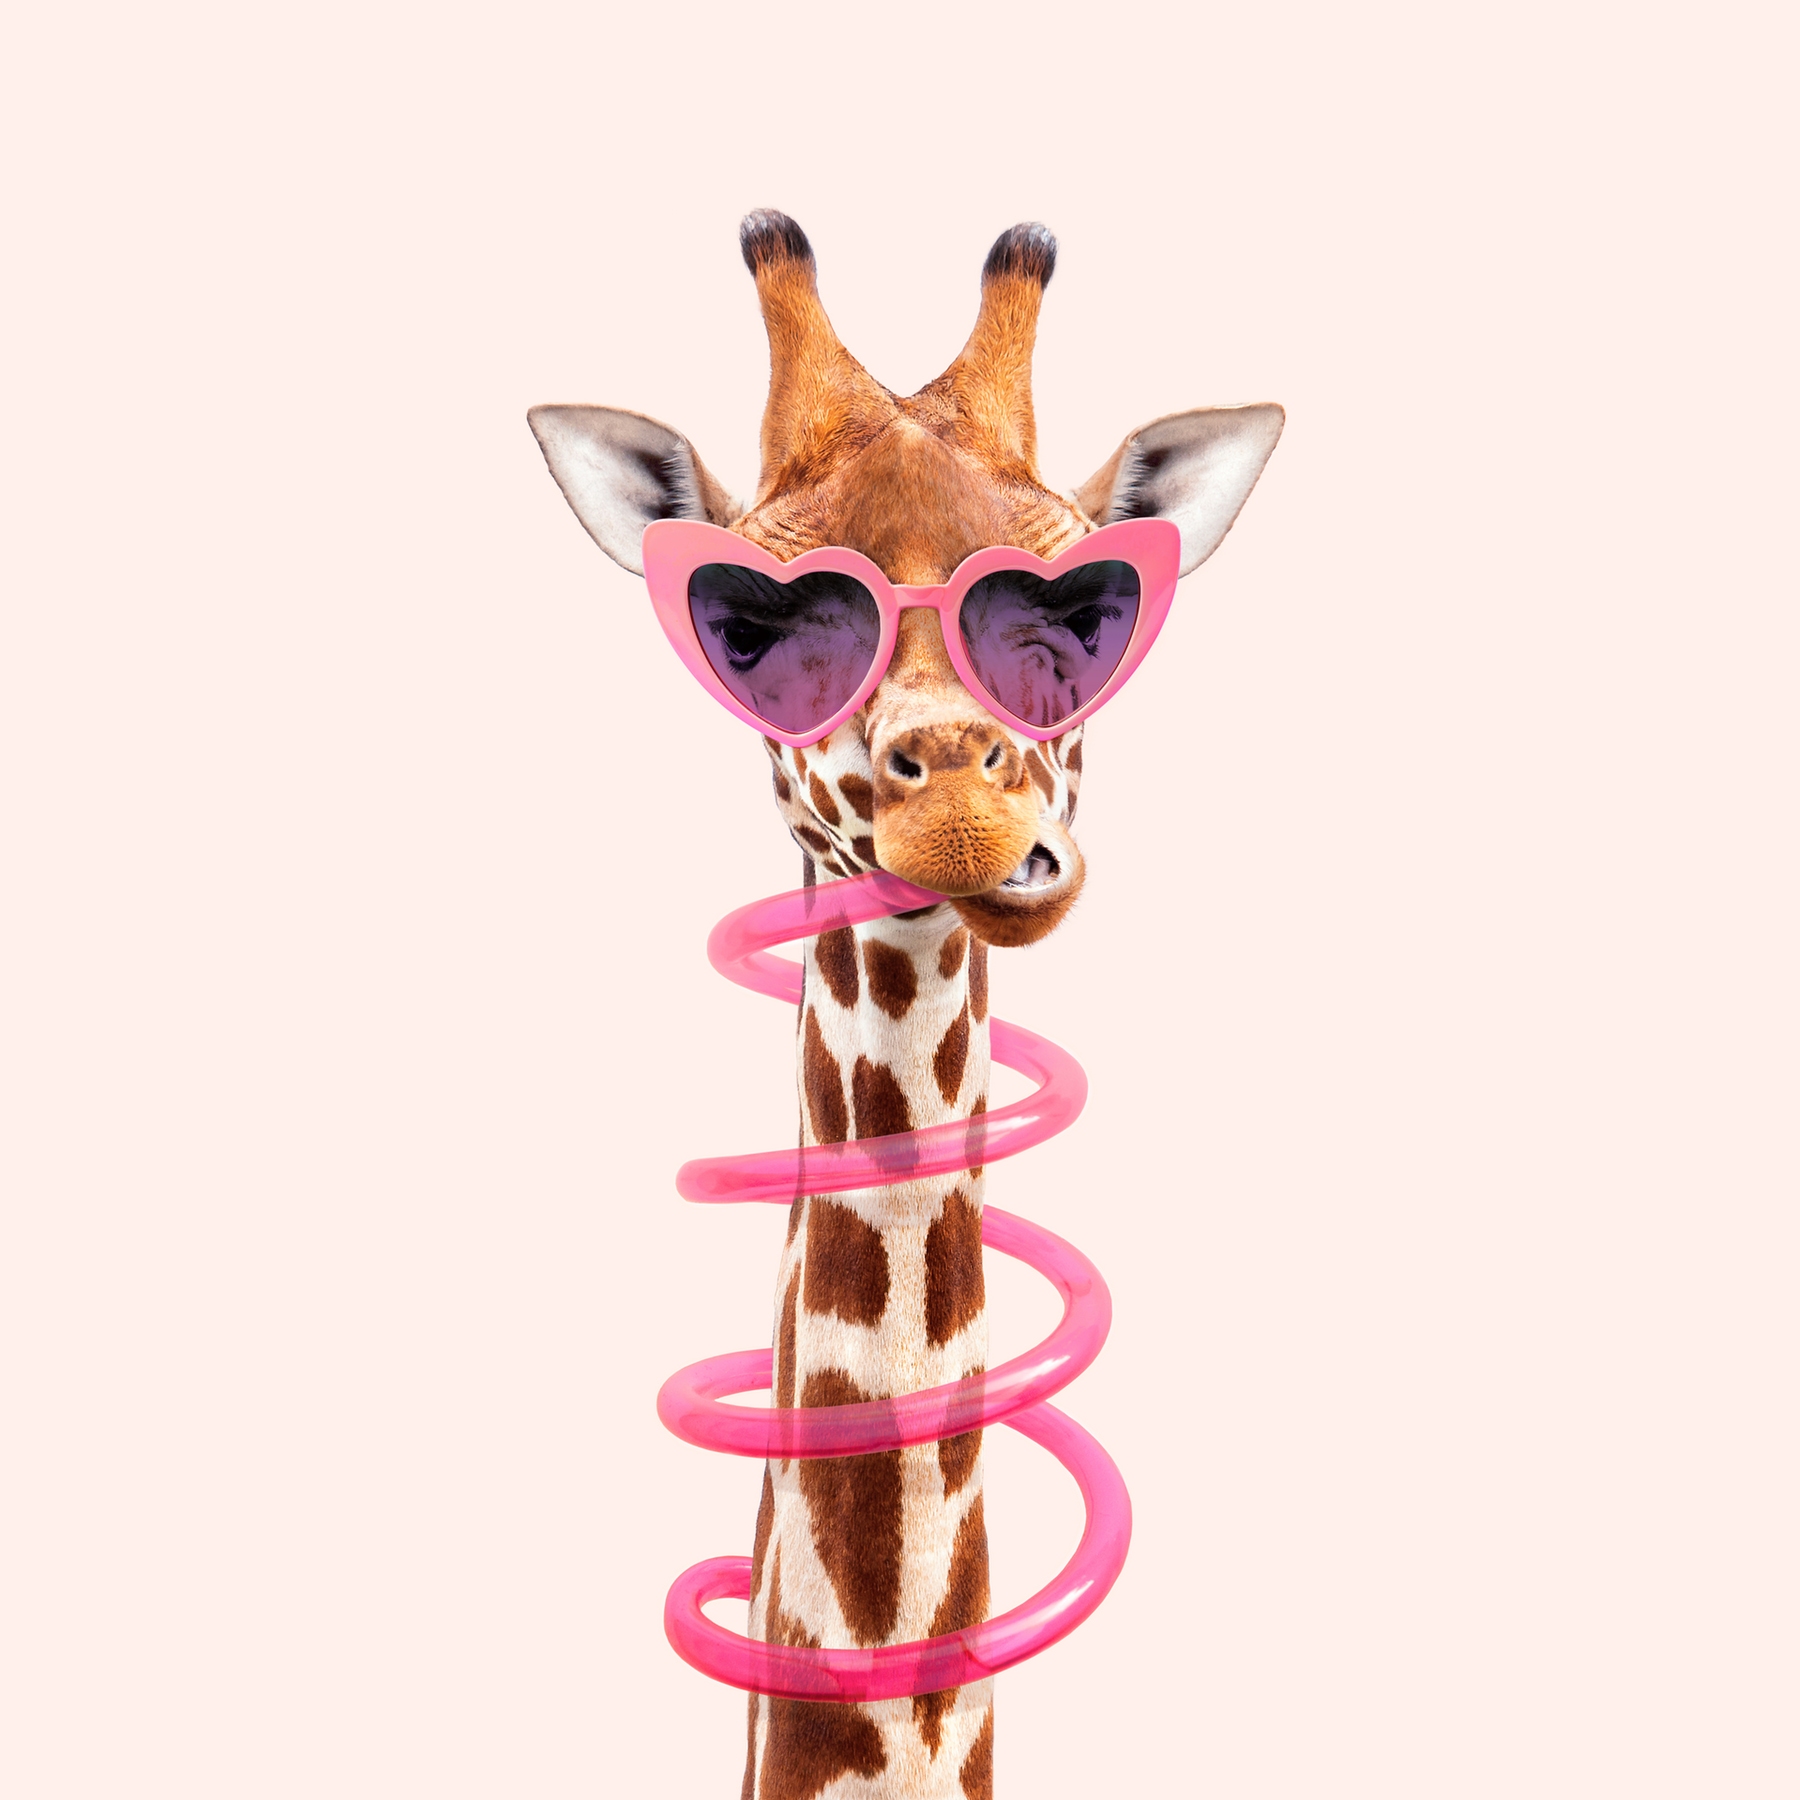 Buy Thirsty Giraffe wallpaper